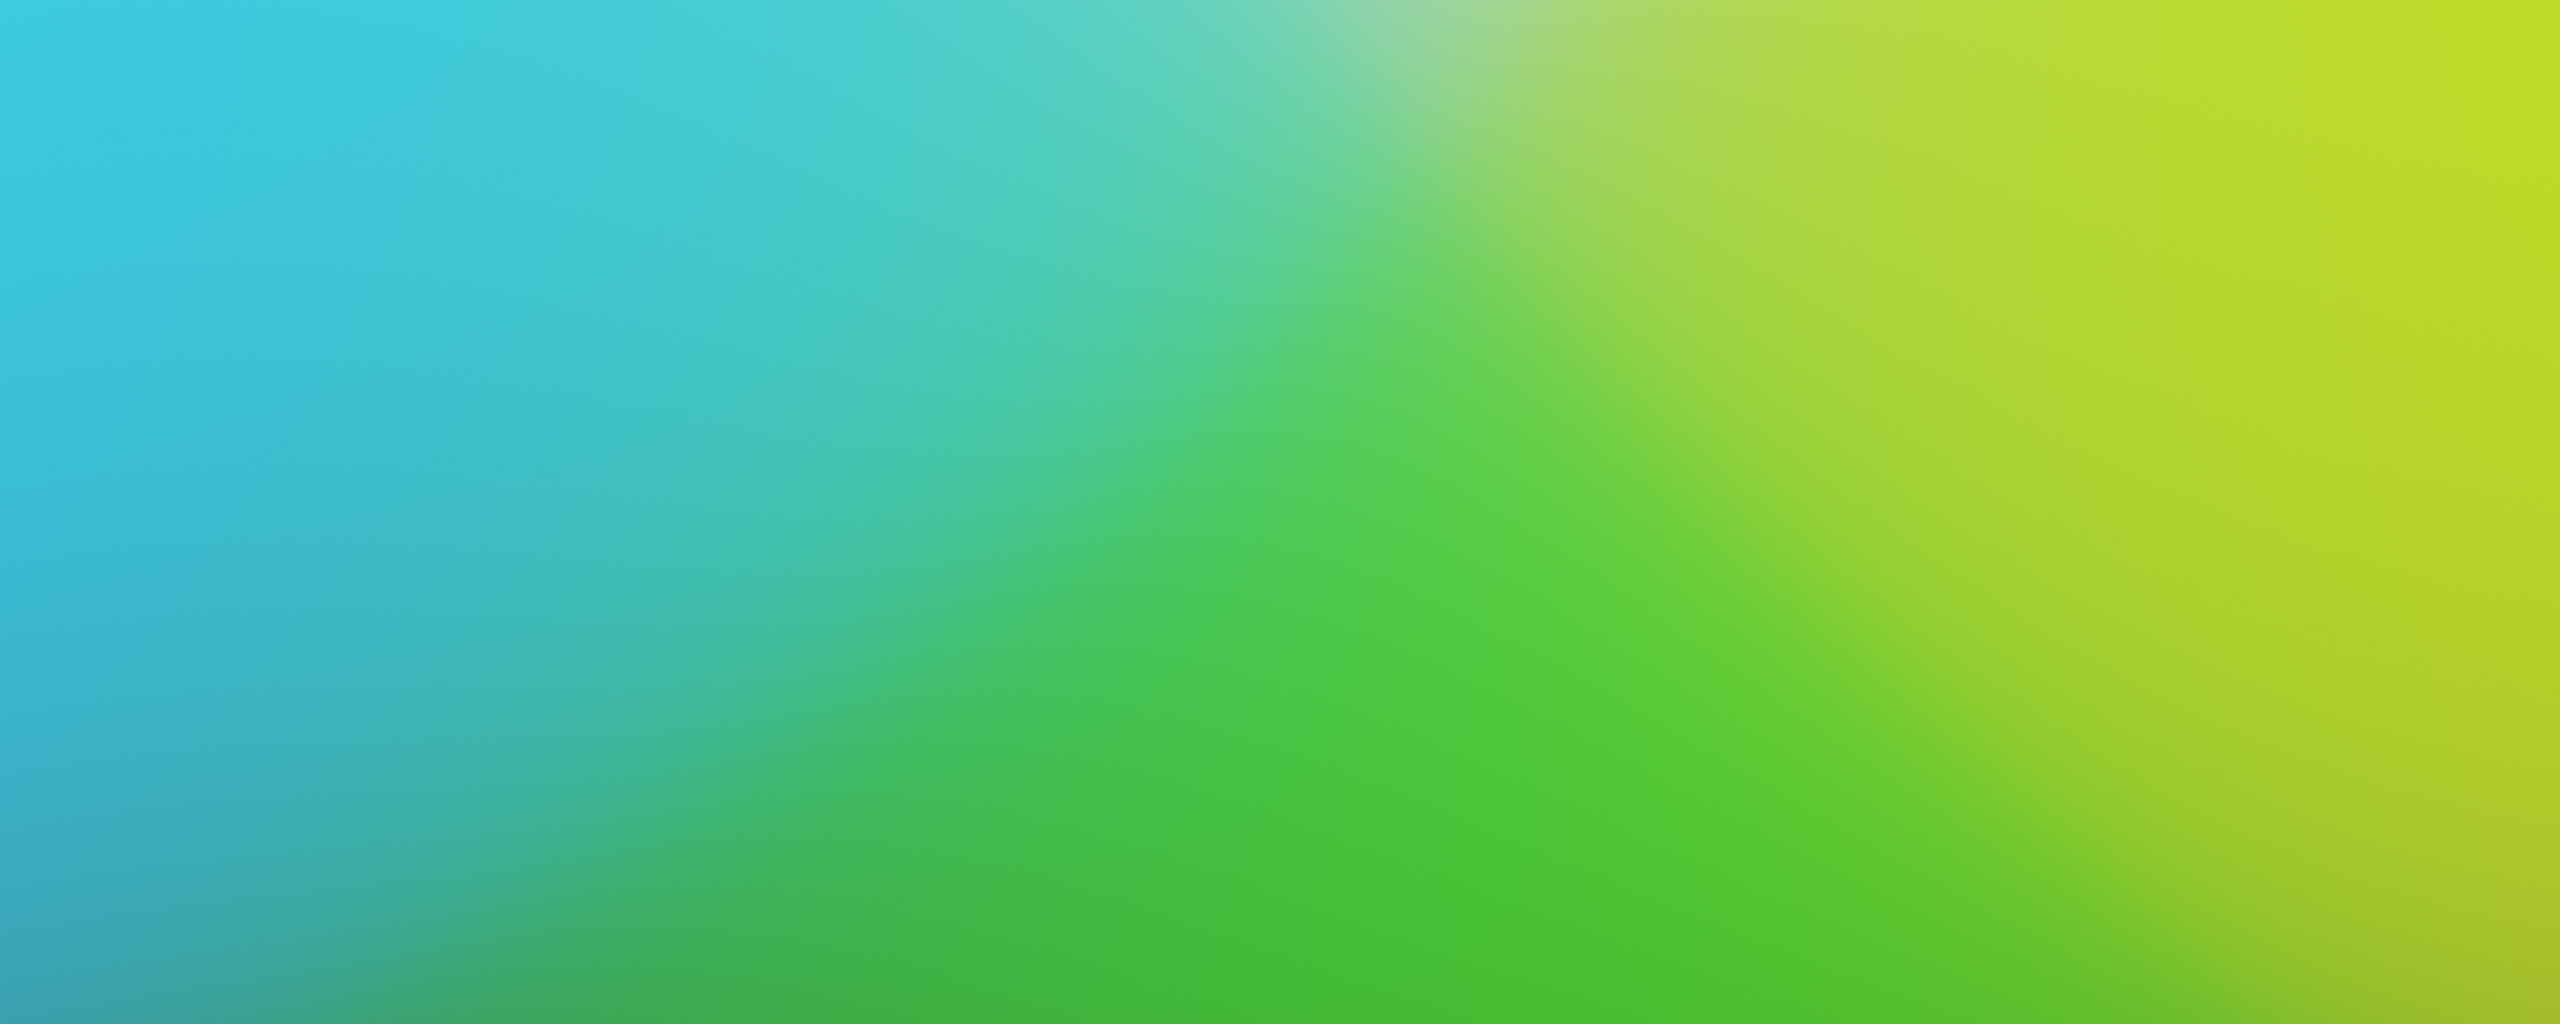 Download wallpaper 2560x1024 blue green, gradient, abstract, blur, dual ...